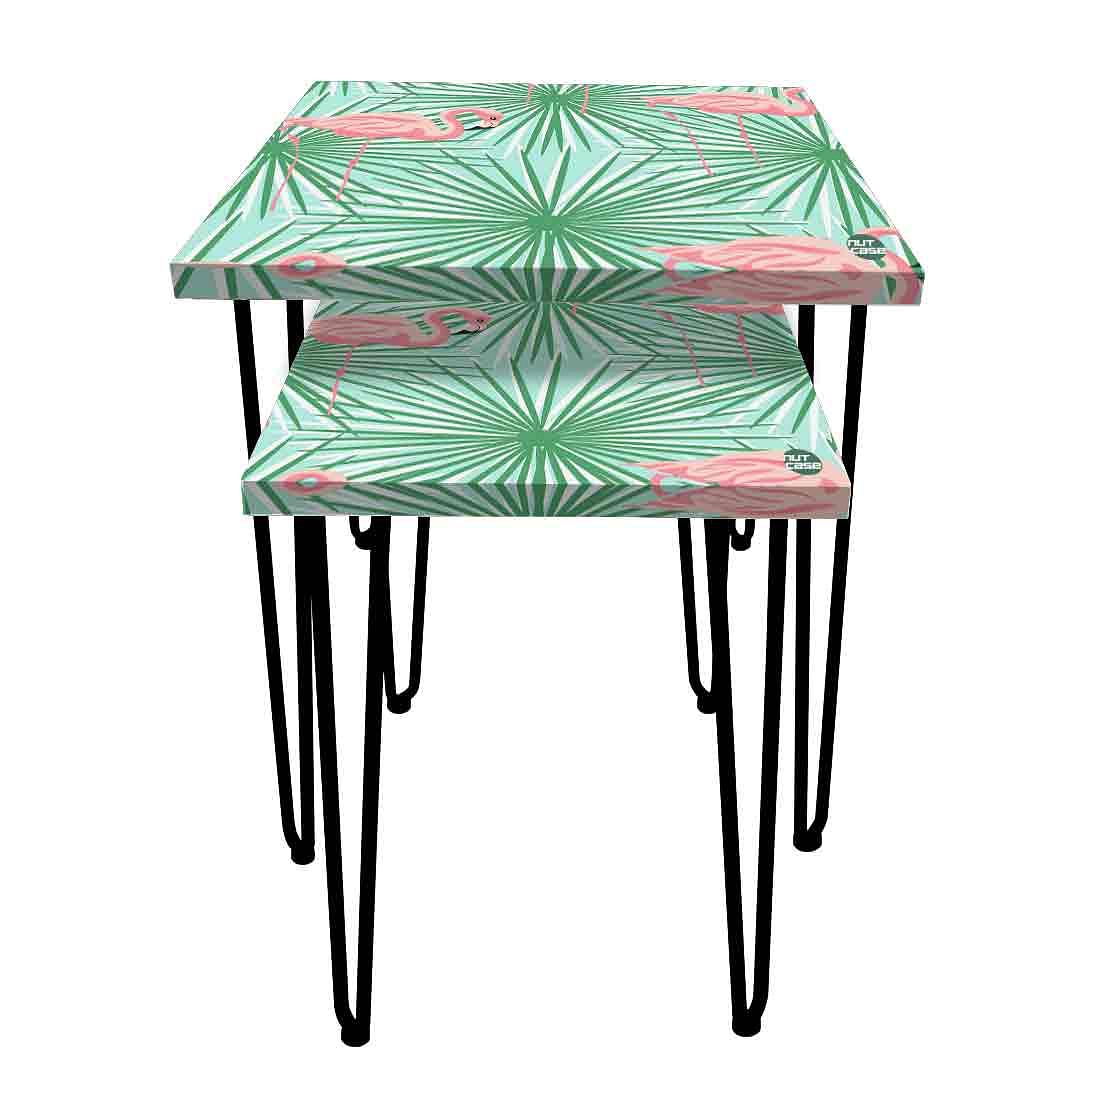 Designer Nest of Tables Side Table for Home Kitchen Balcony -  Flamingo Nutcase